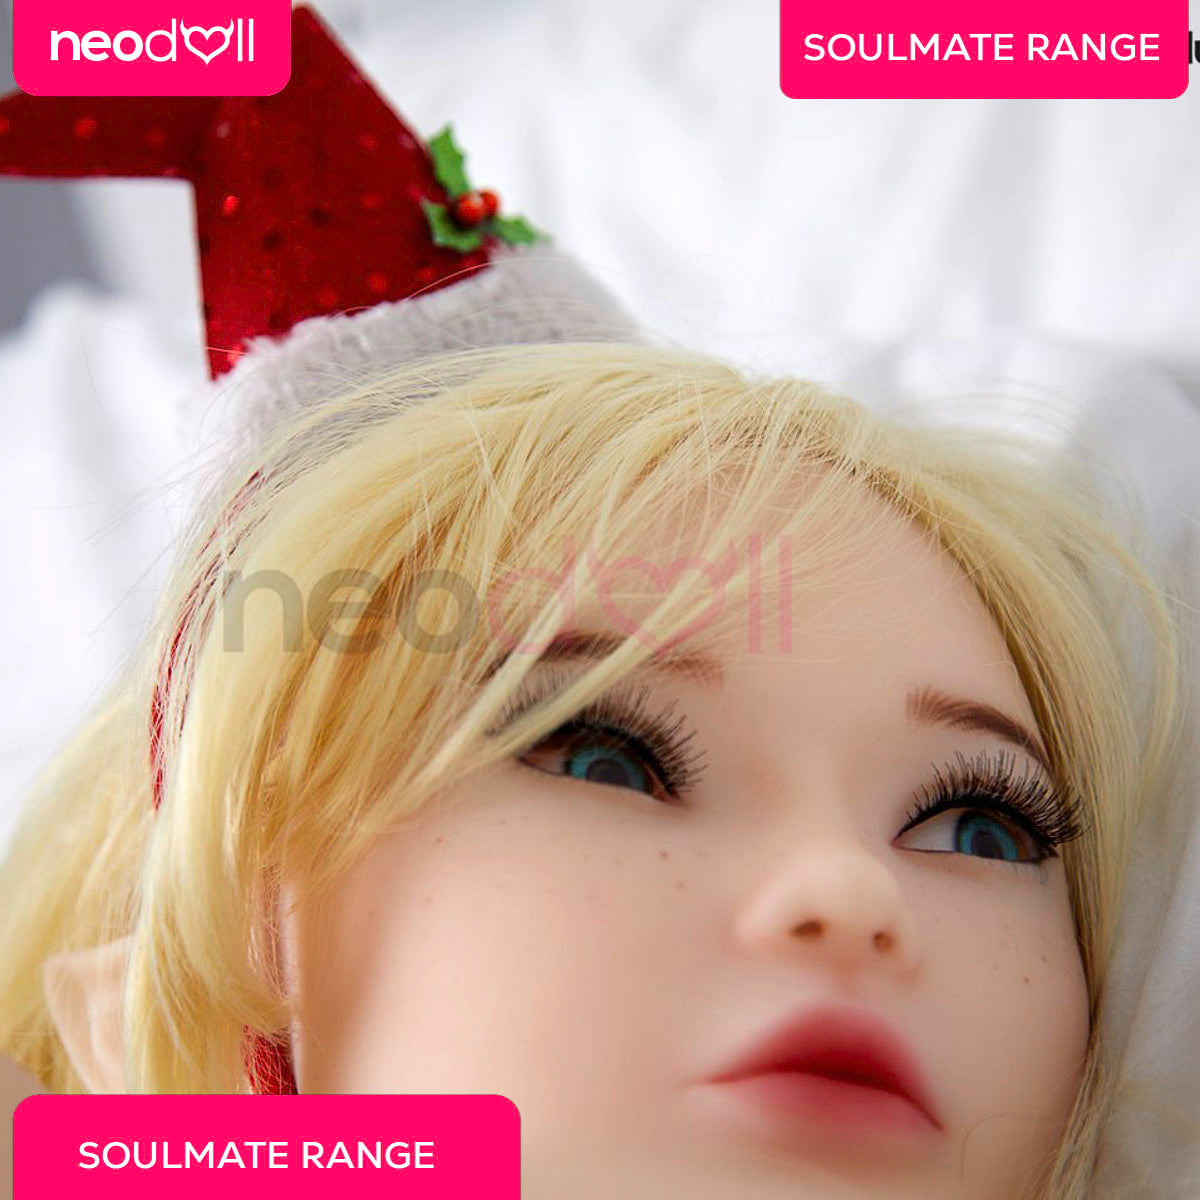 SoulMate Doll - Diana Elf Head - X mas - Sex Doll Torso - White